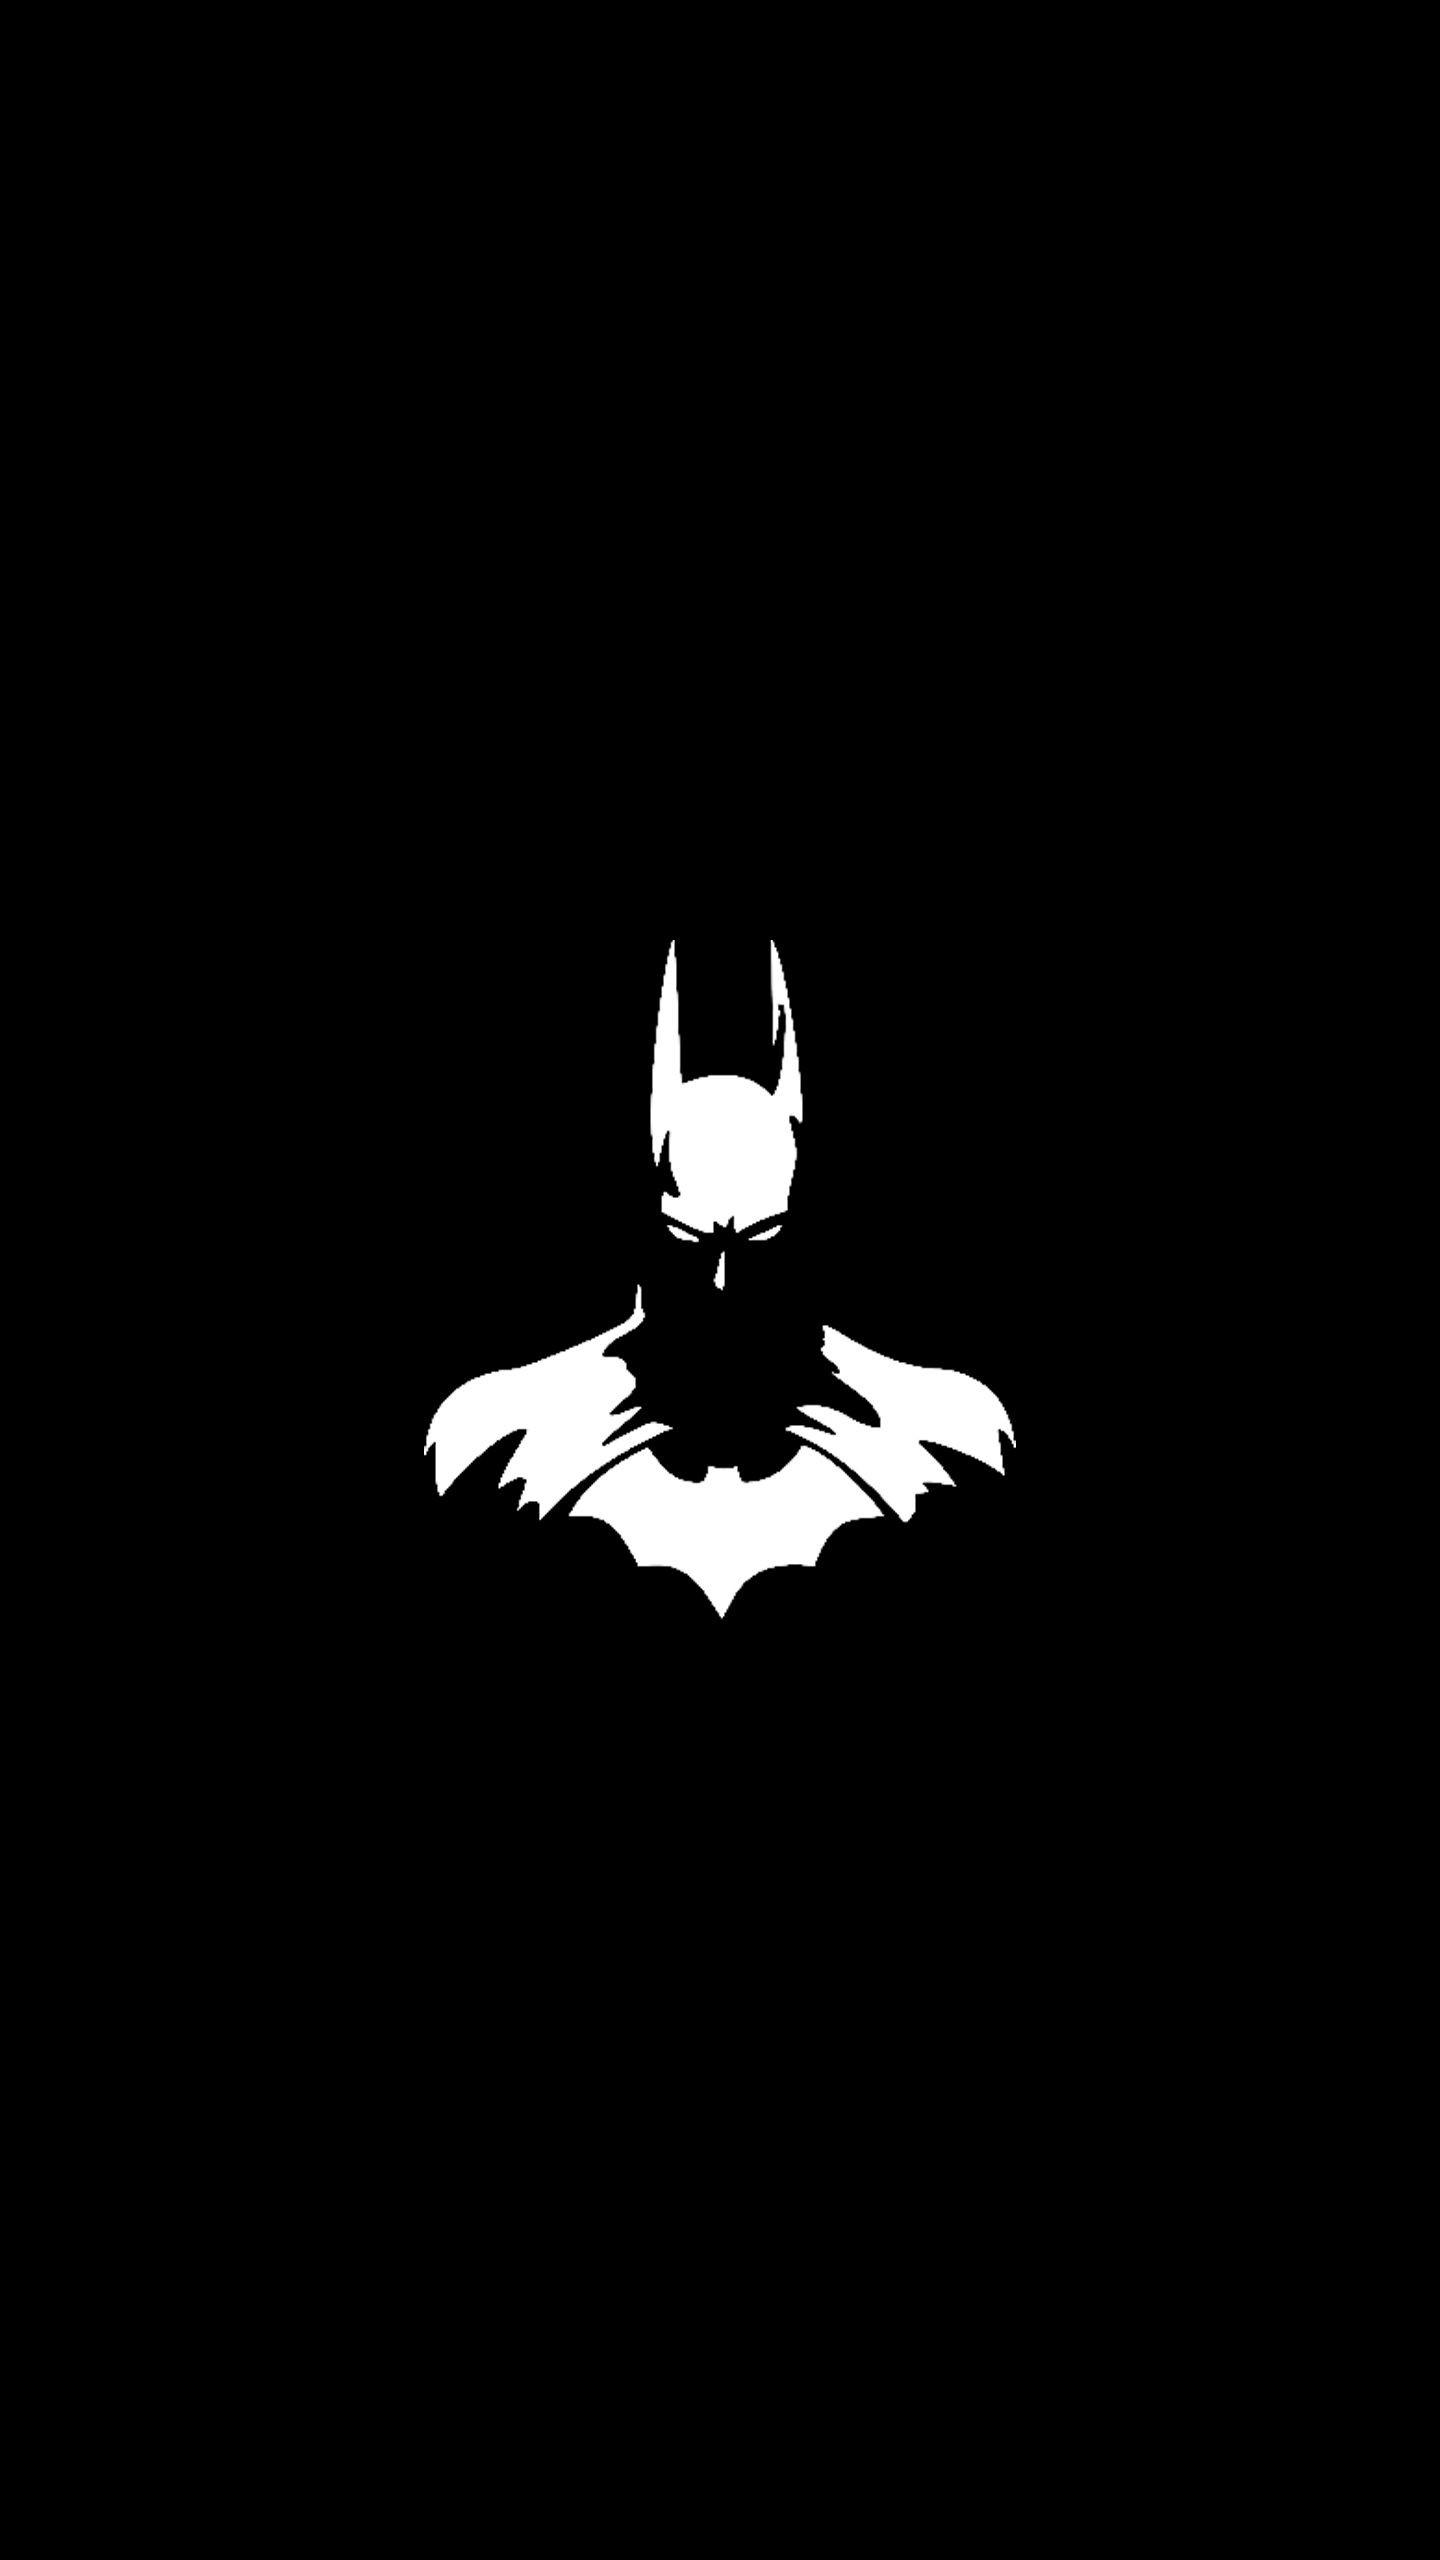 Batman Wallpaper background picture